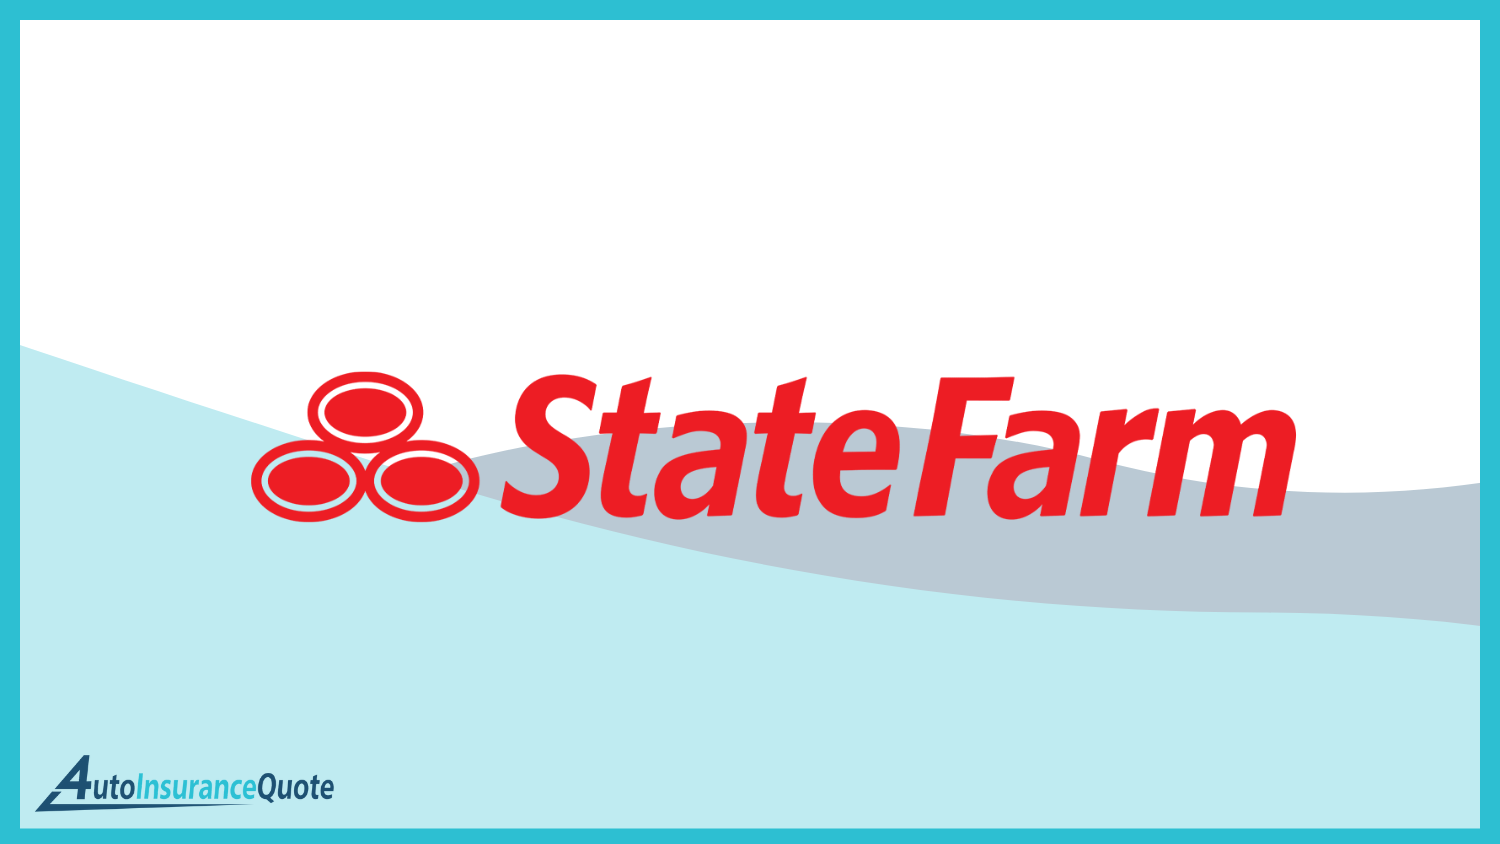 State Farm: Best Auto Insurance for College Graduates